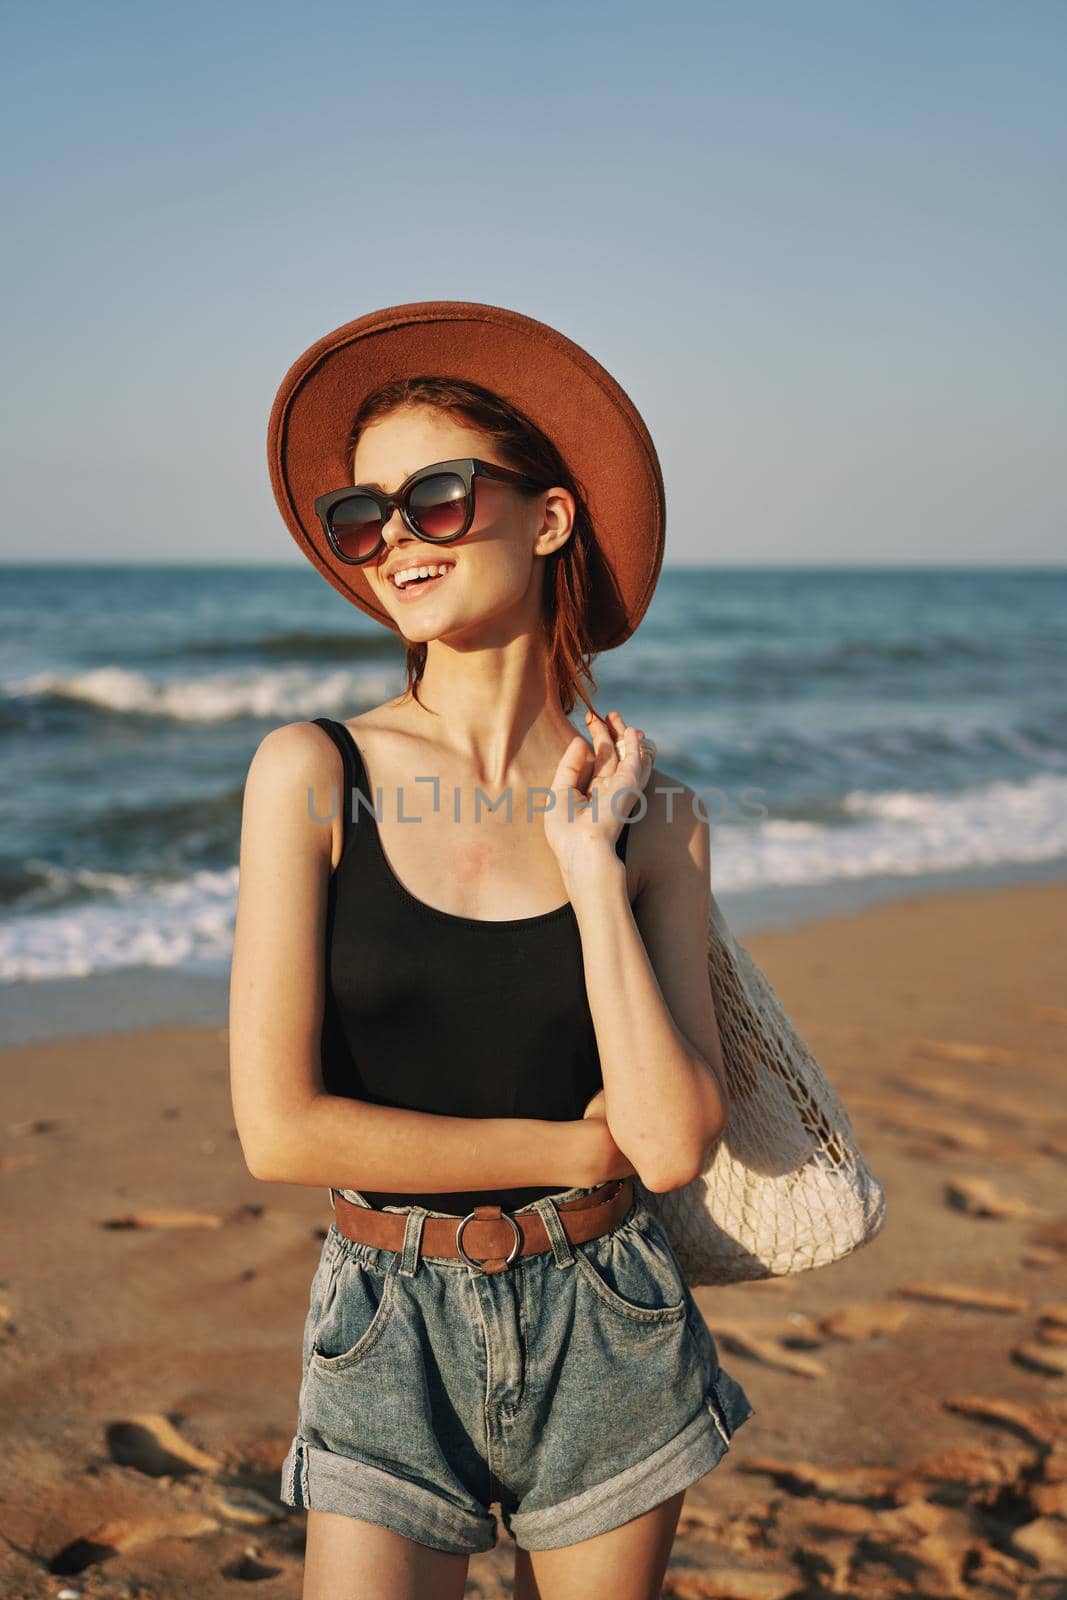 woman walking on the beach landscape sun fun lifestyle by Vichizh